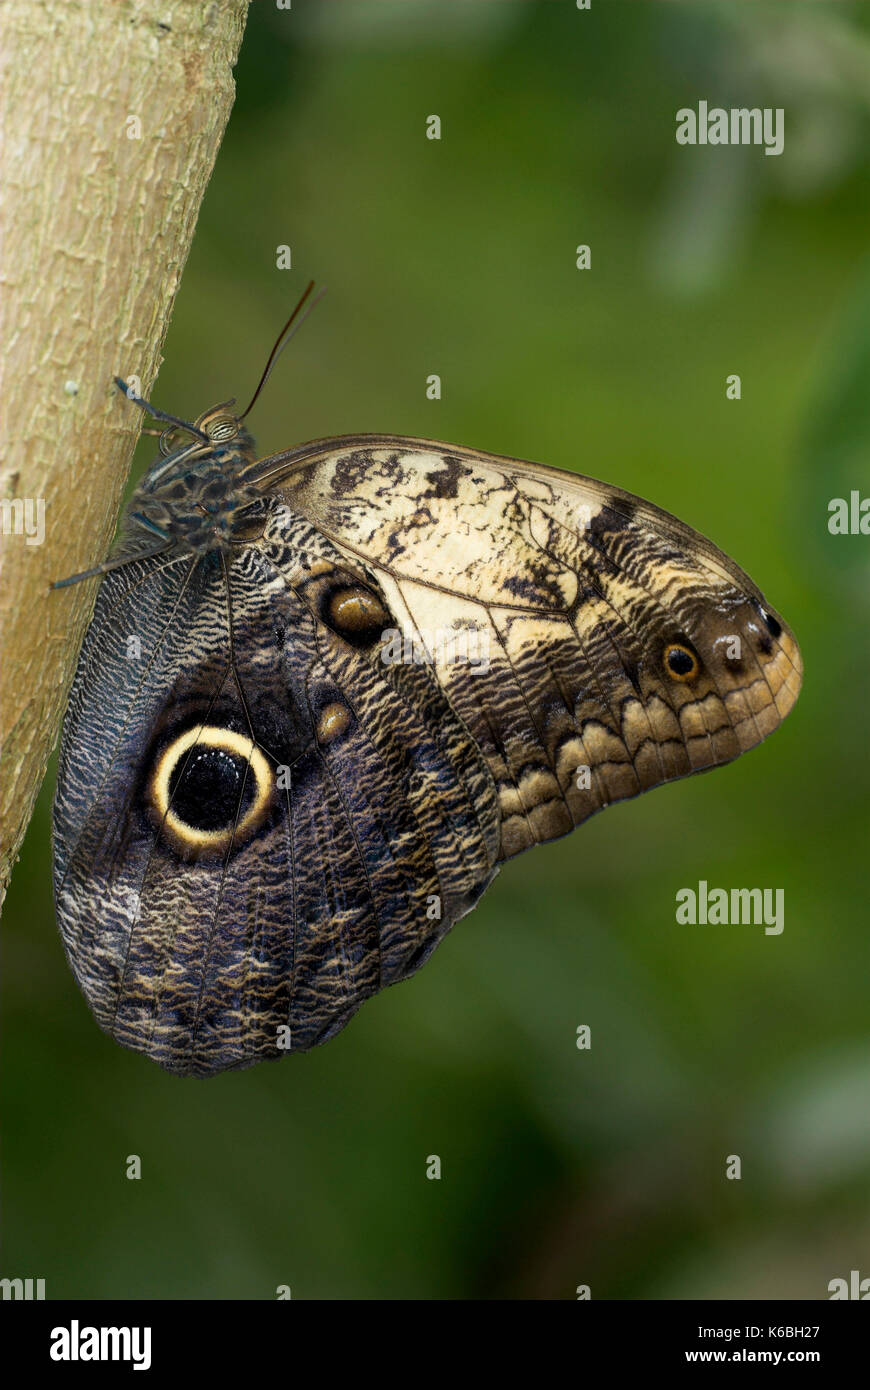 Owl Butterfly, Caligo species, perched on tree trunk showing false eye spots on wings, Stock Photo